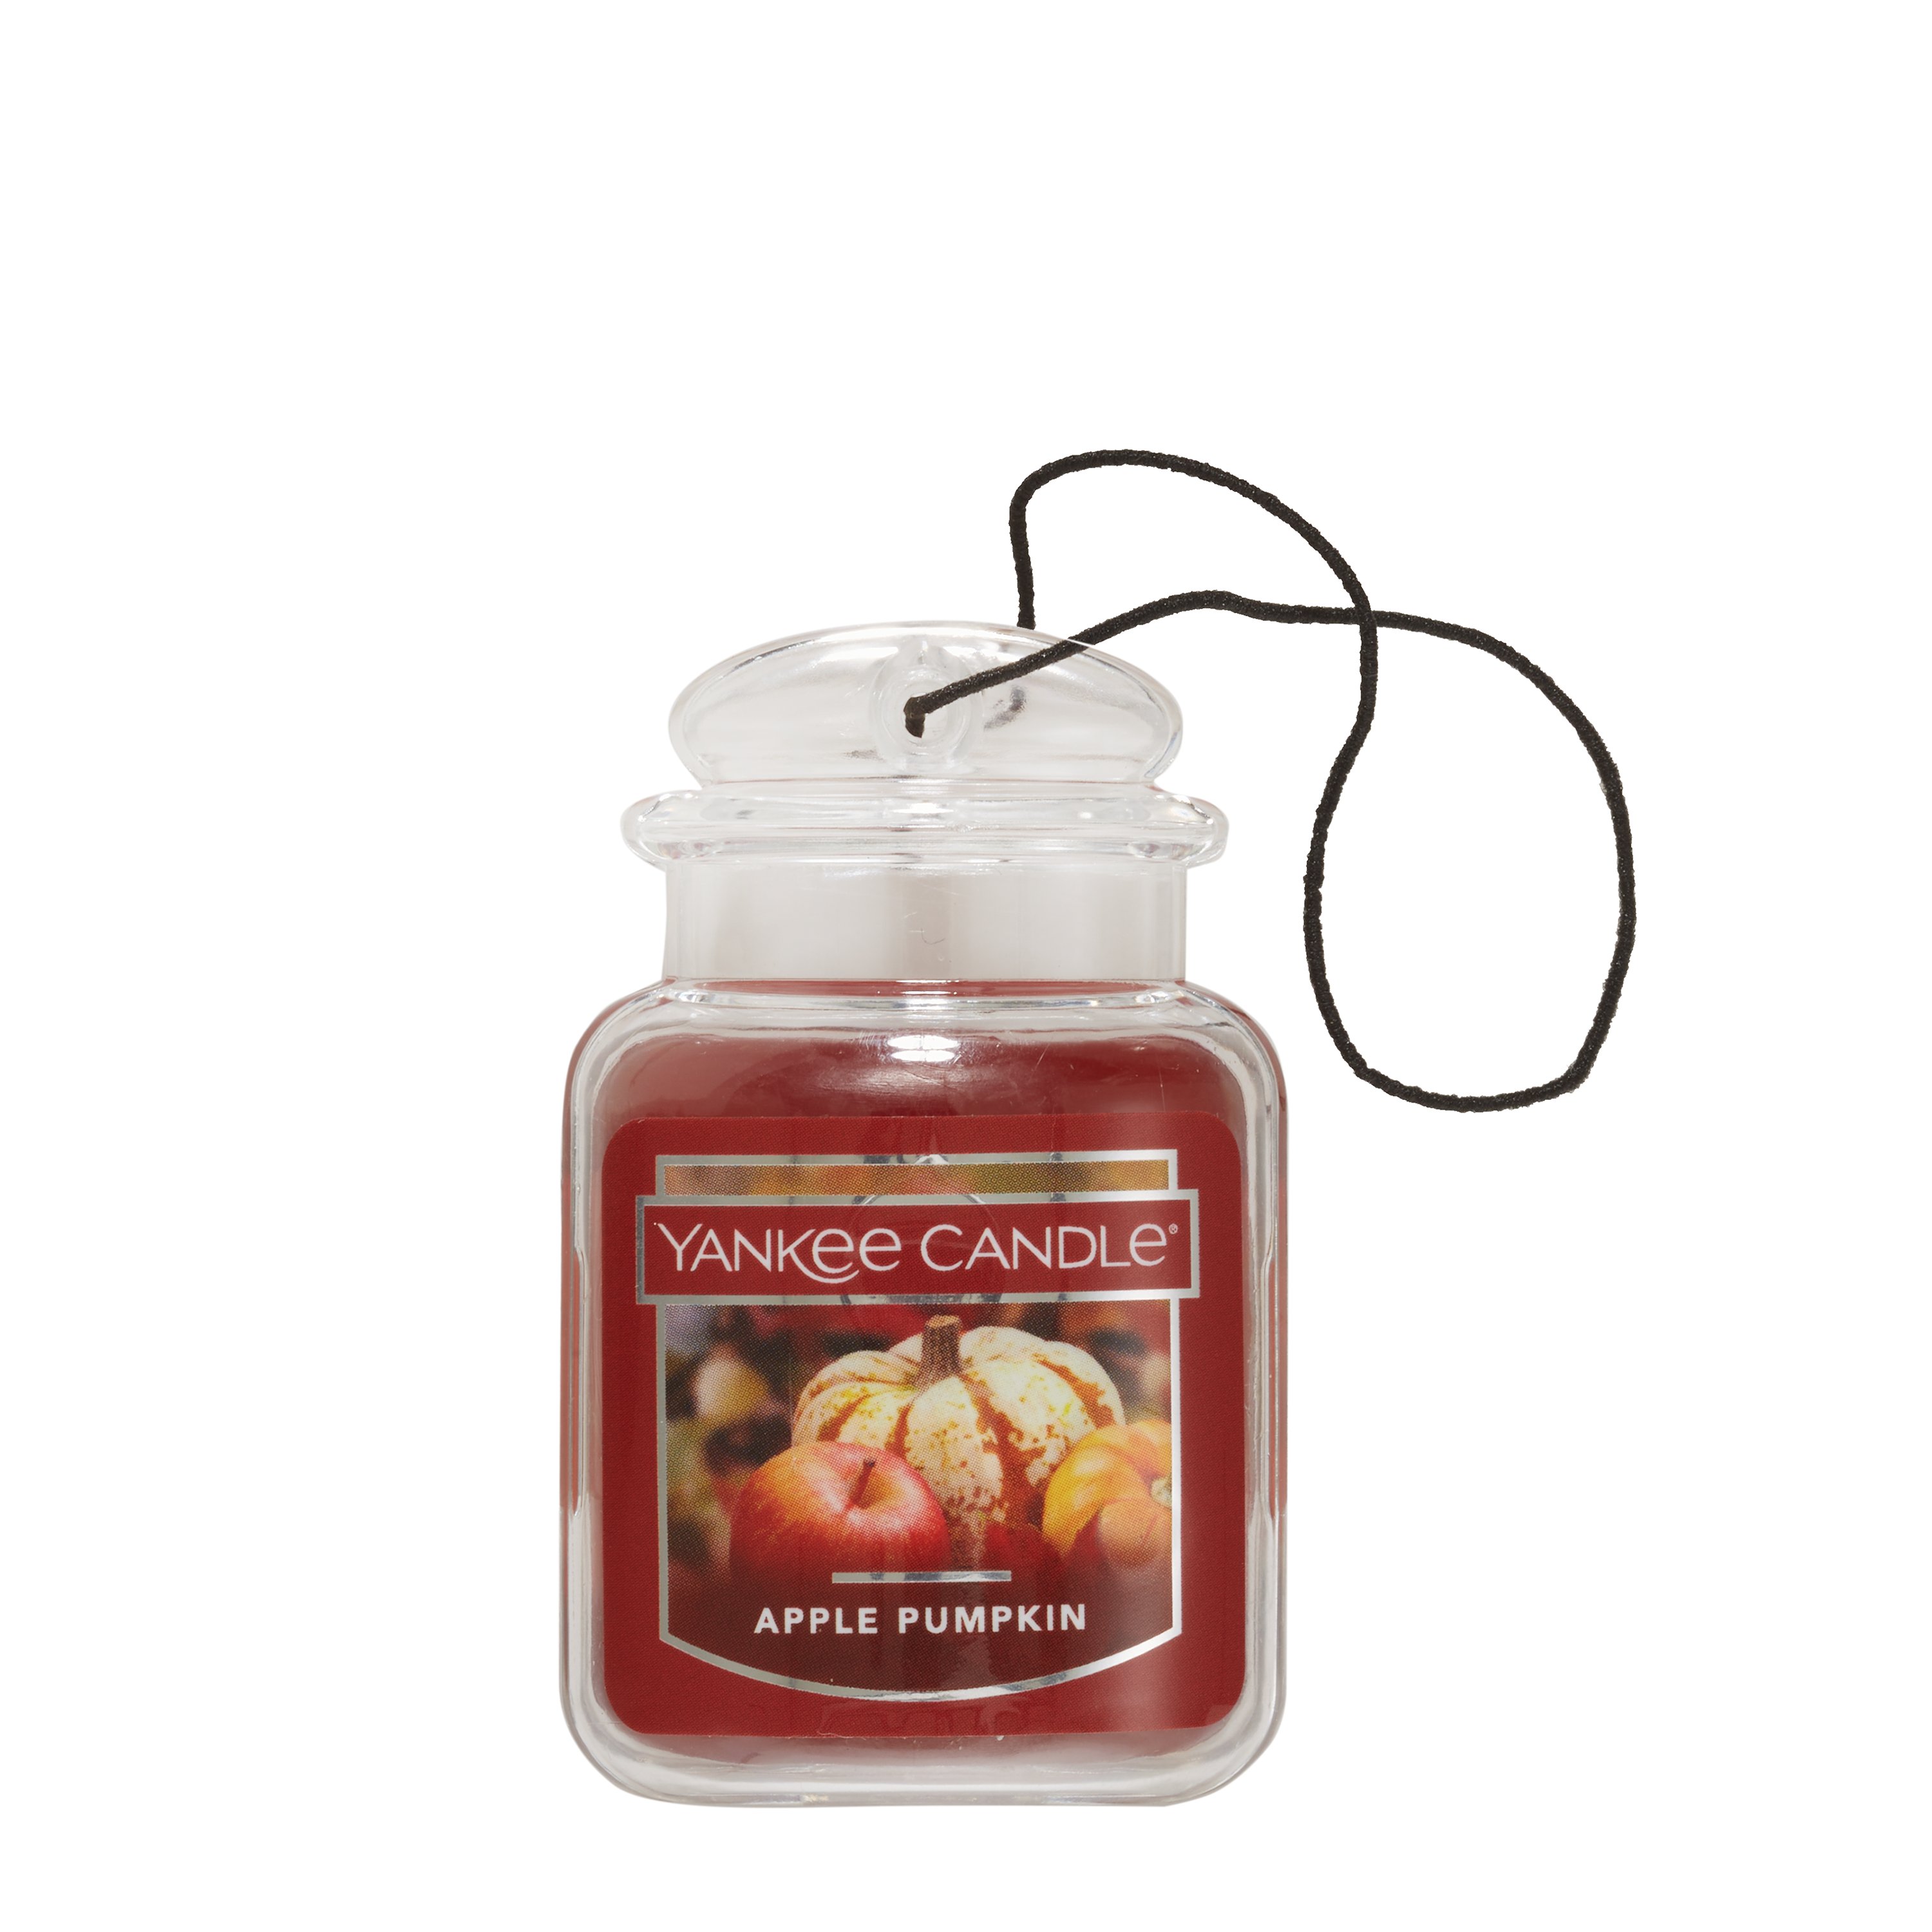 Yankee Candle Apple Pumpkin Whole Home Air Freshener, 4 Pack 